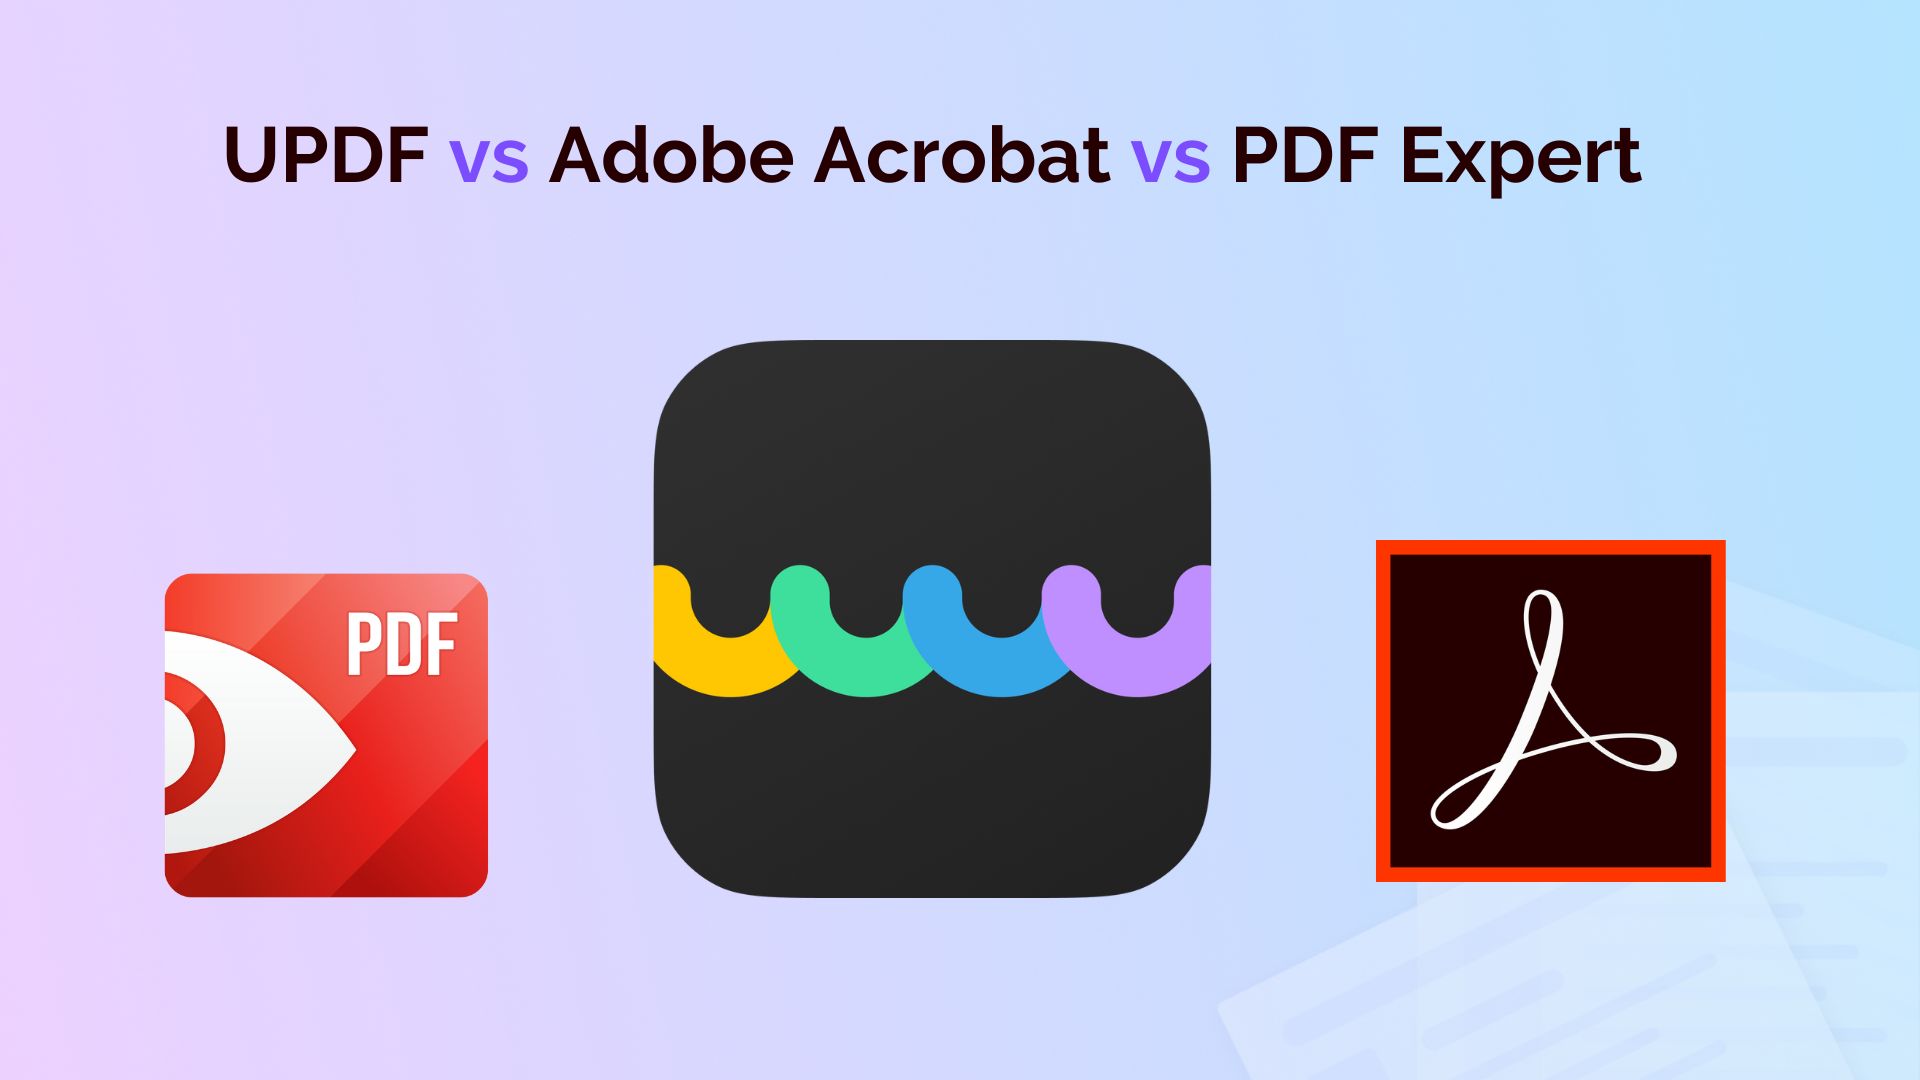 pdf expert vs adobe acrobat